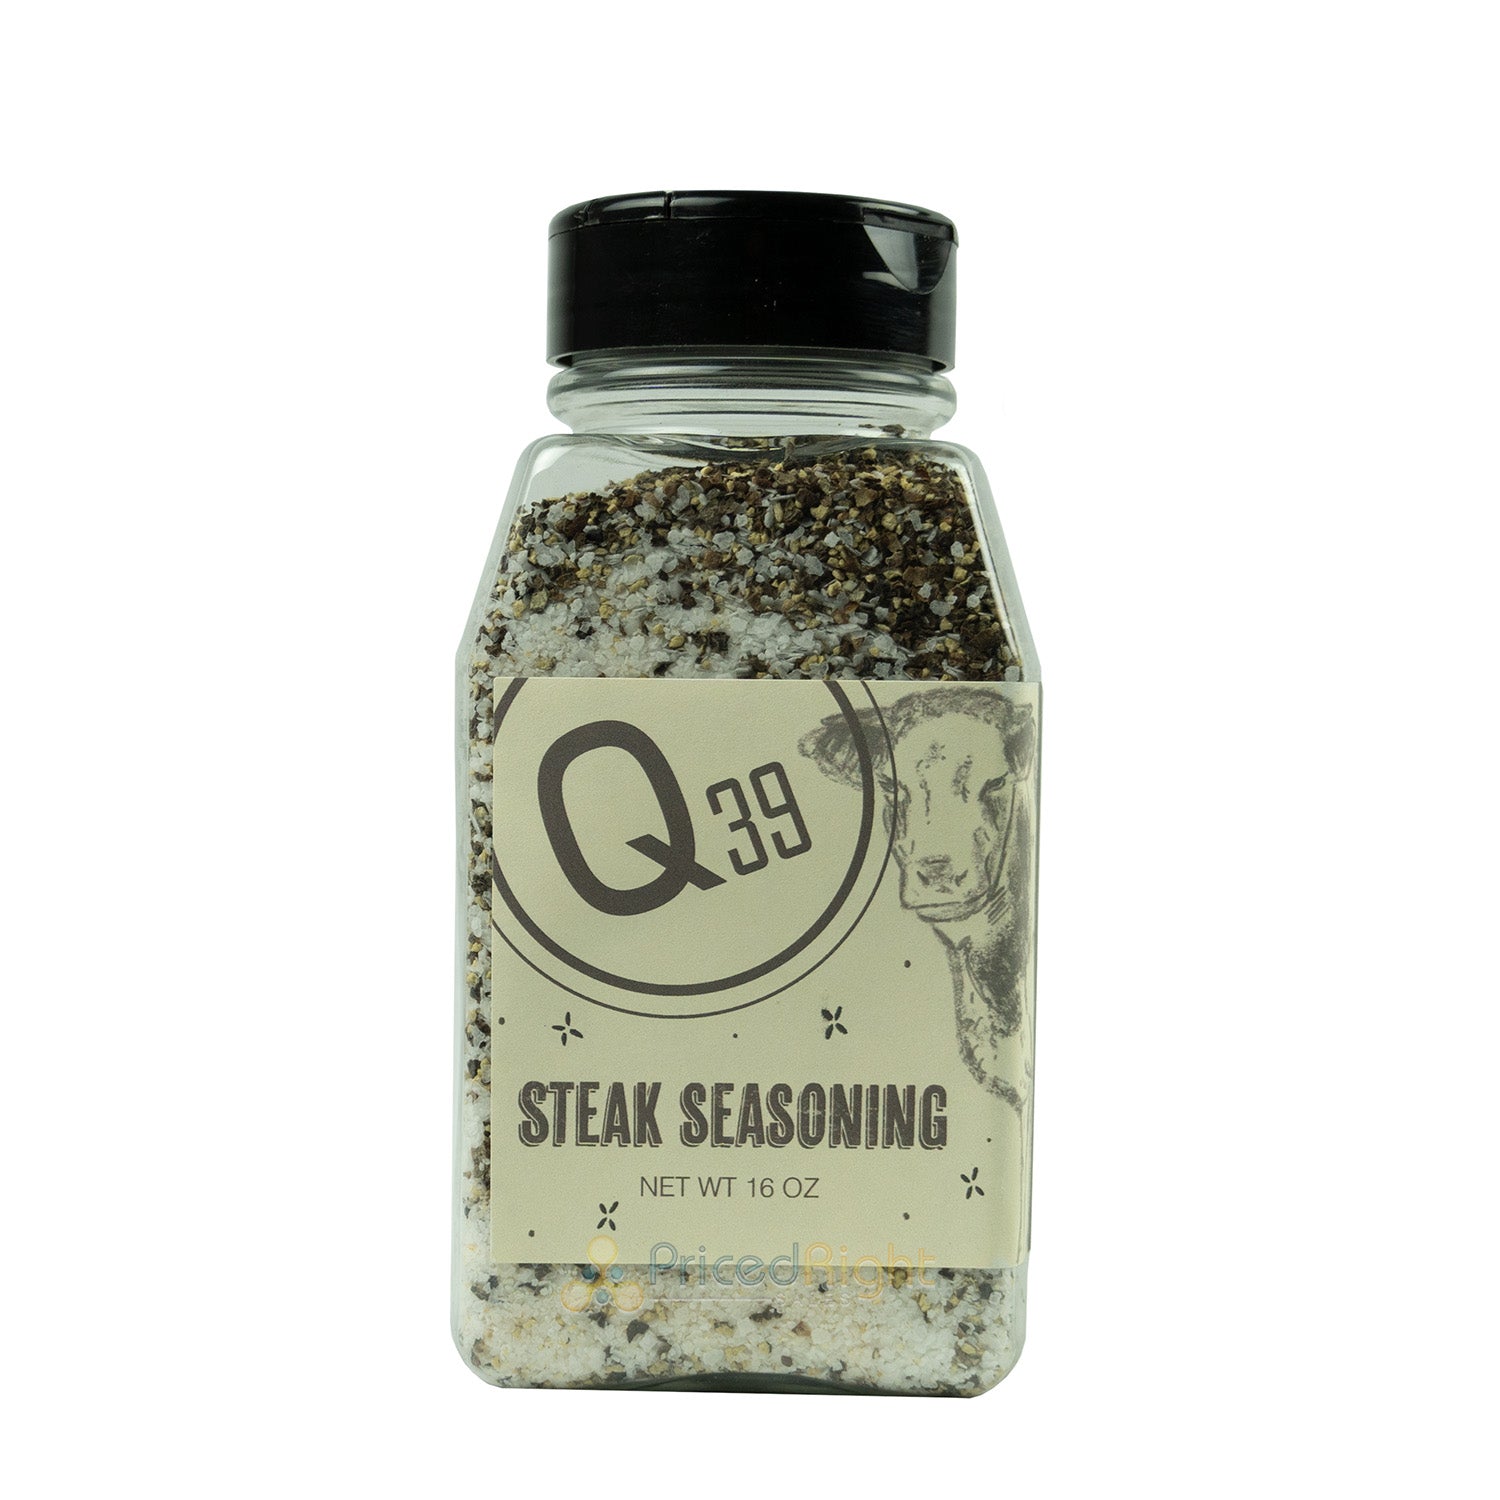 Q39 Steak Seasoning Salt Pepper & Garlic Rub For Meat & Veggies No MSG 16 oz